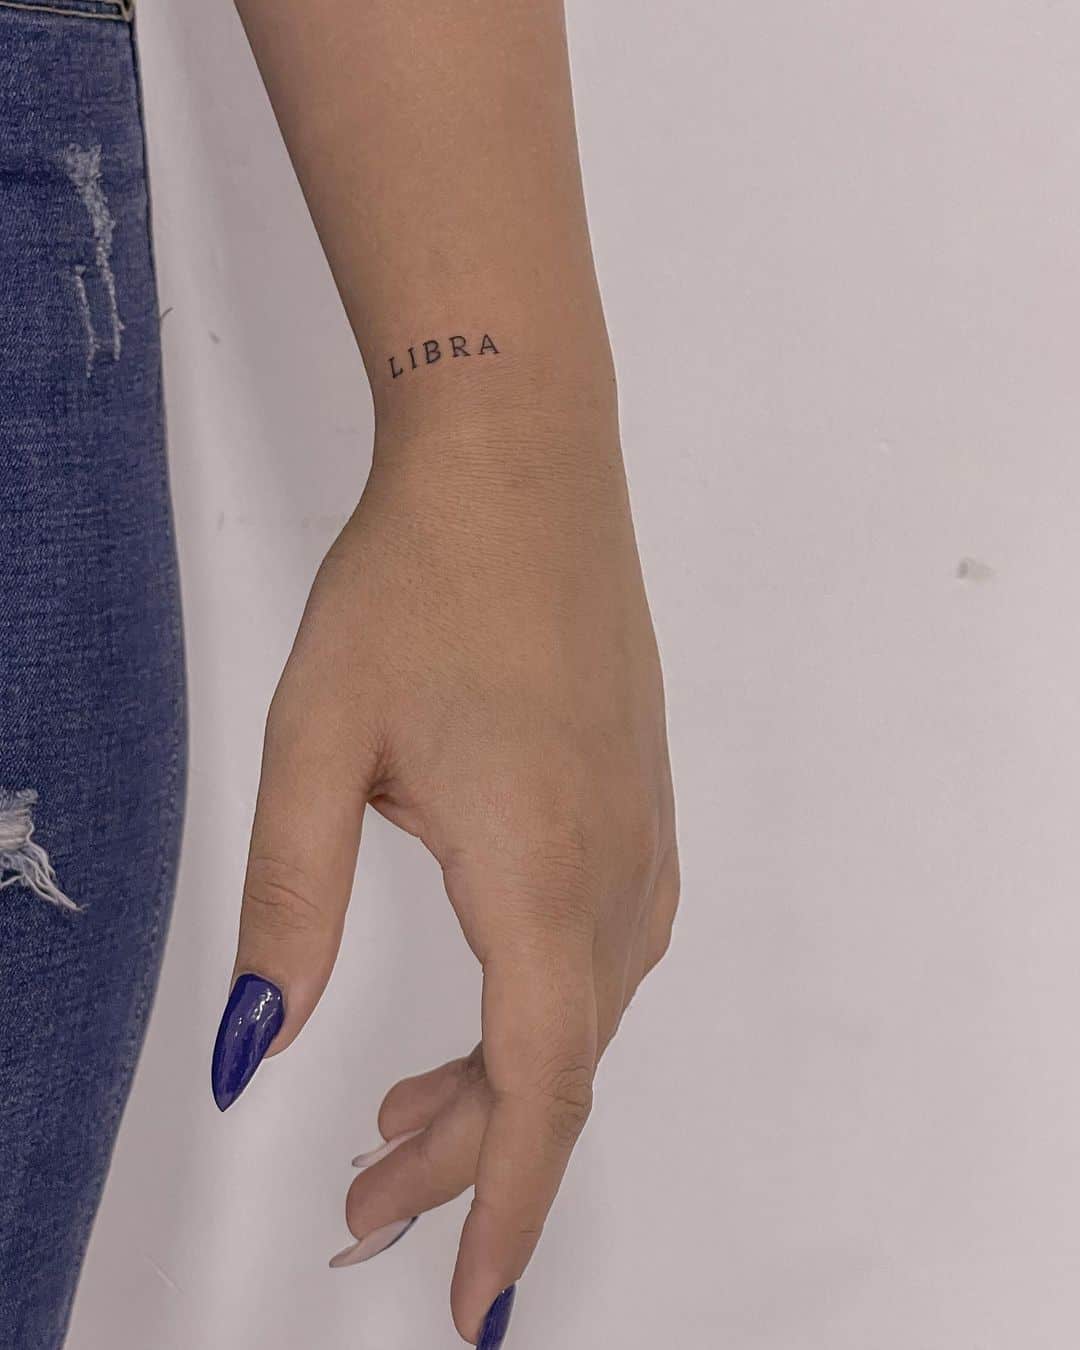 30 Libra Tattoo Ideas and Design Inspirations for 2022  100 Tattoos